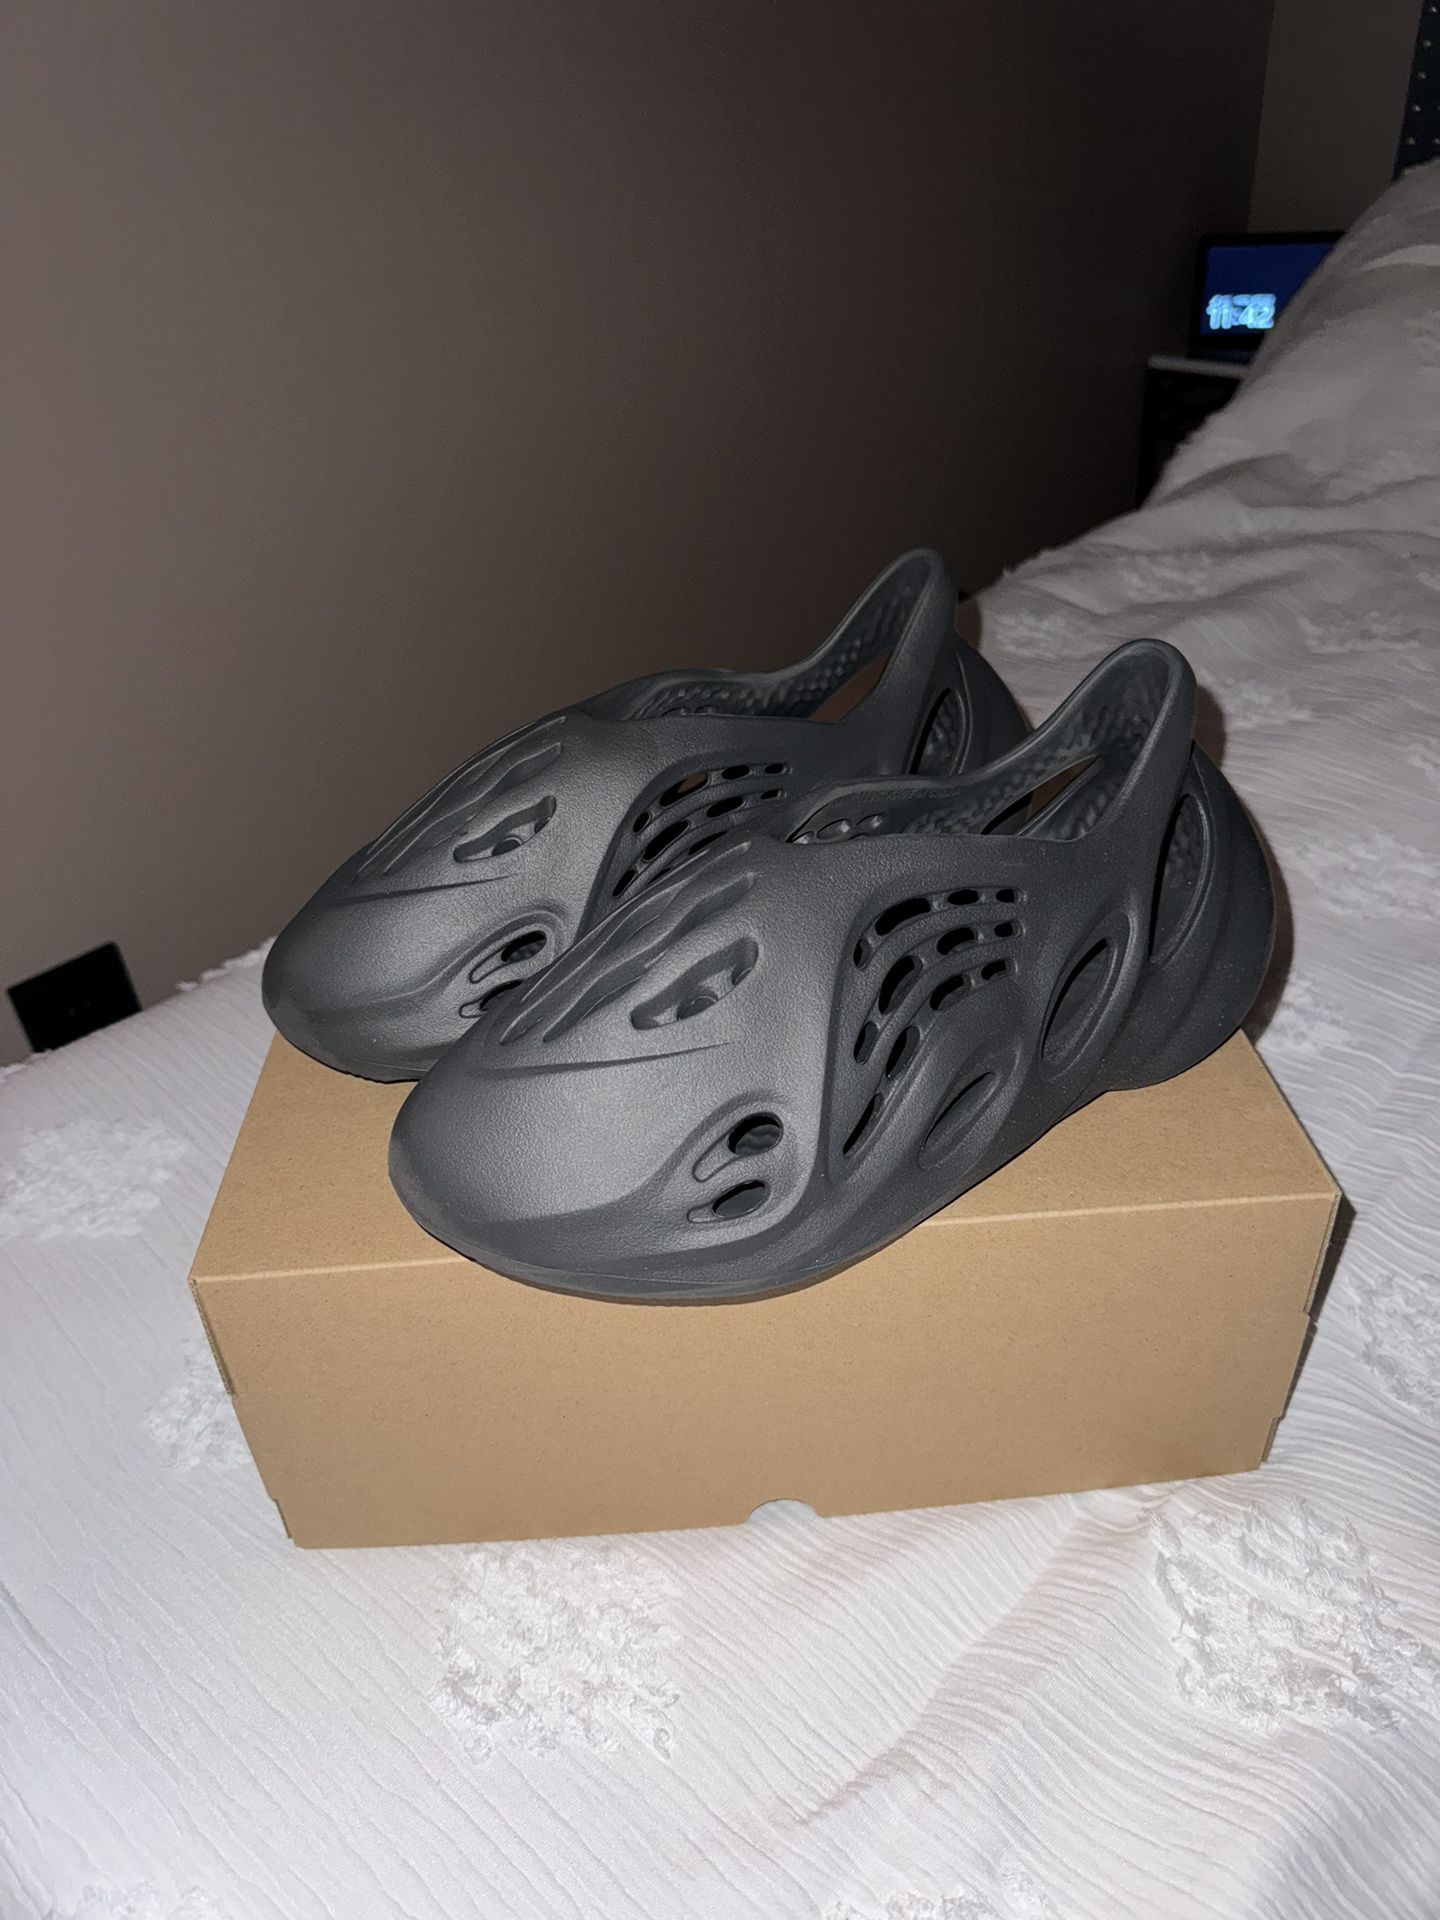 Adidas Yeezy Foam Runner Carbon Size 11